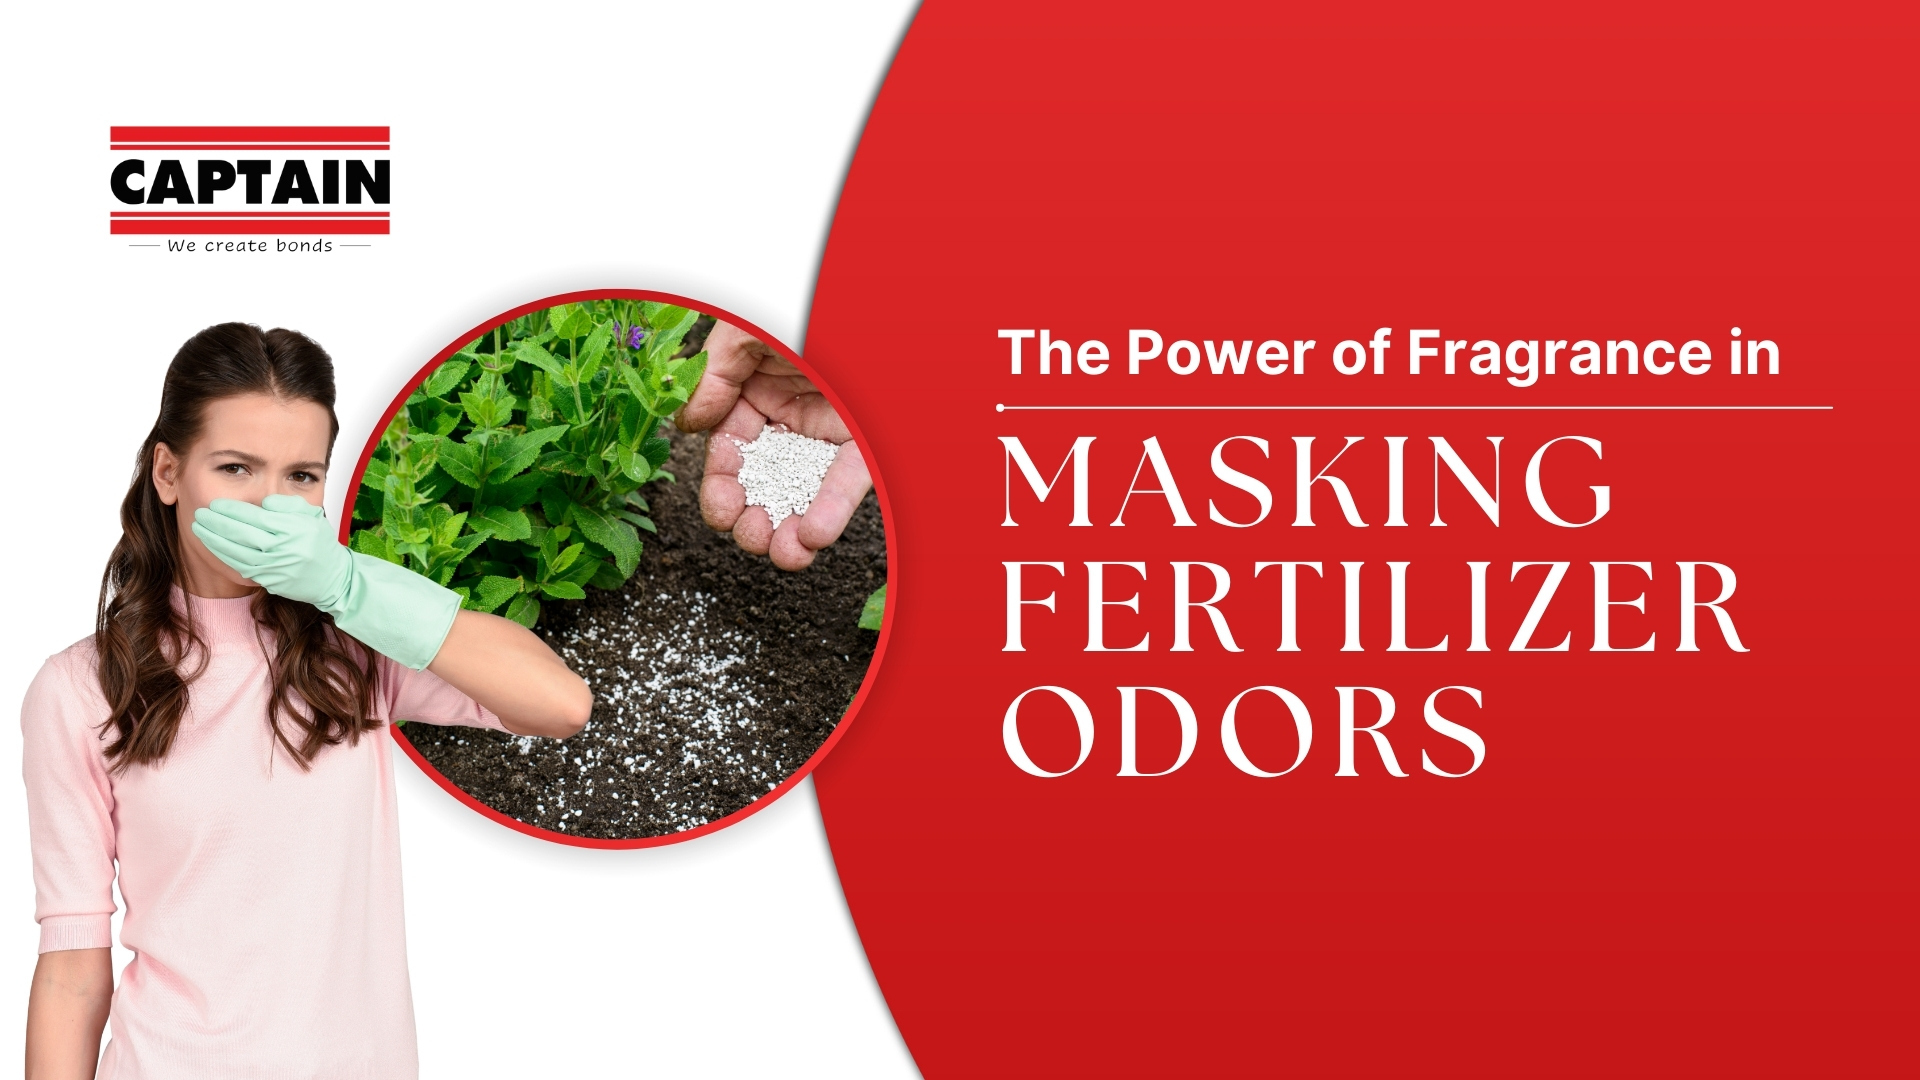 The Power of Fragrance in Masking Fertilizer Odors